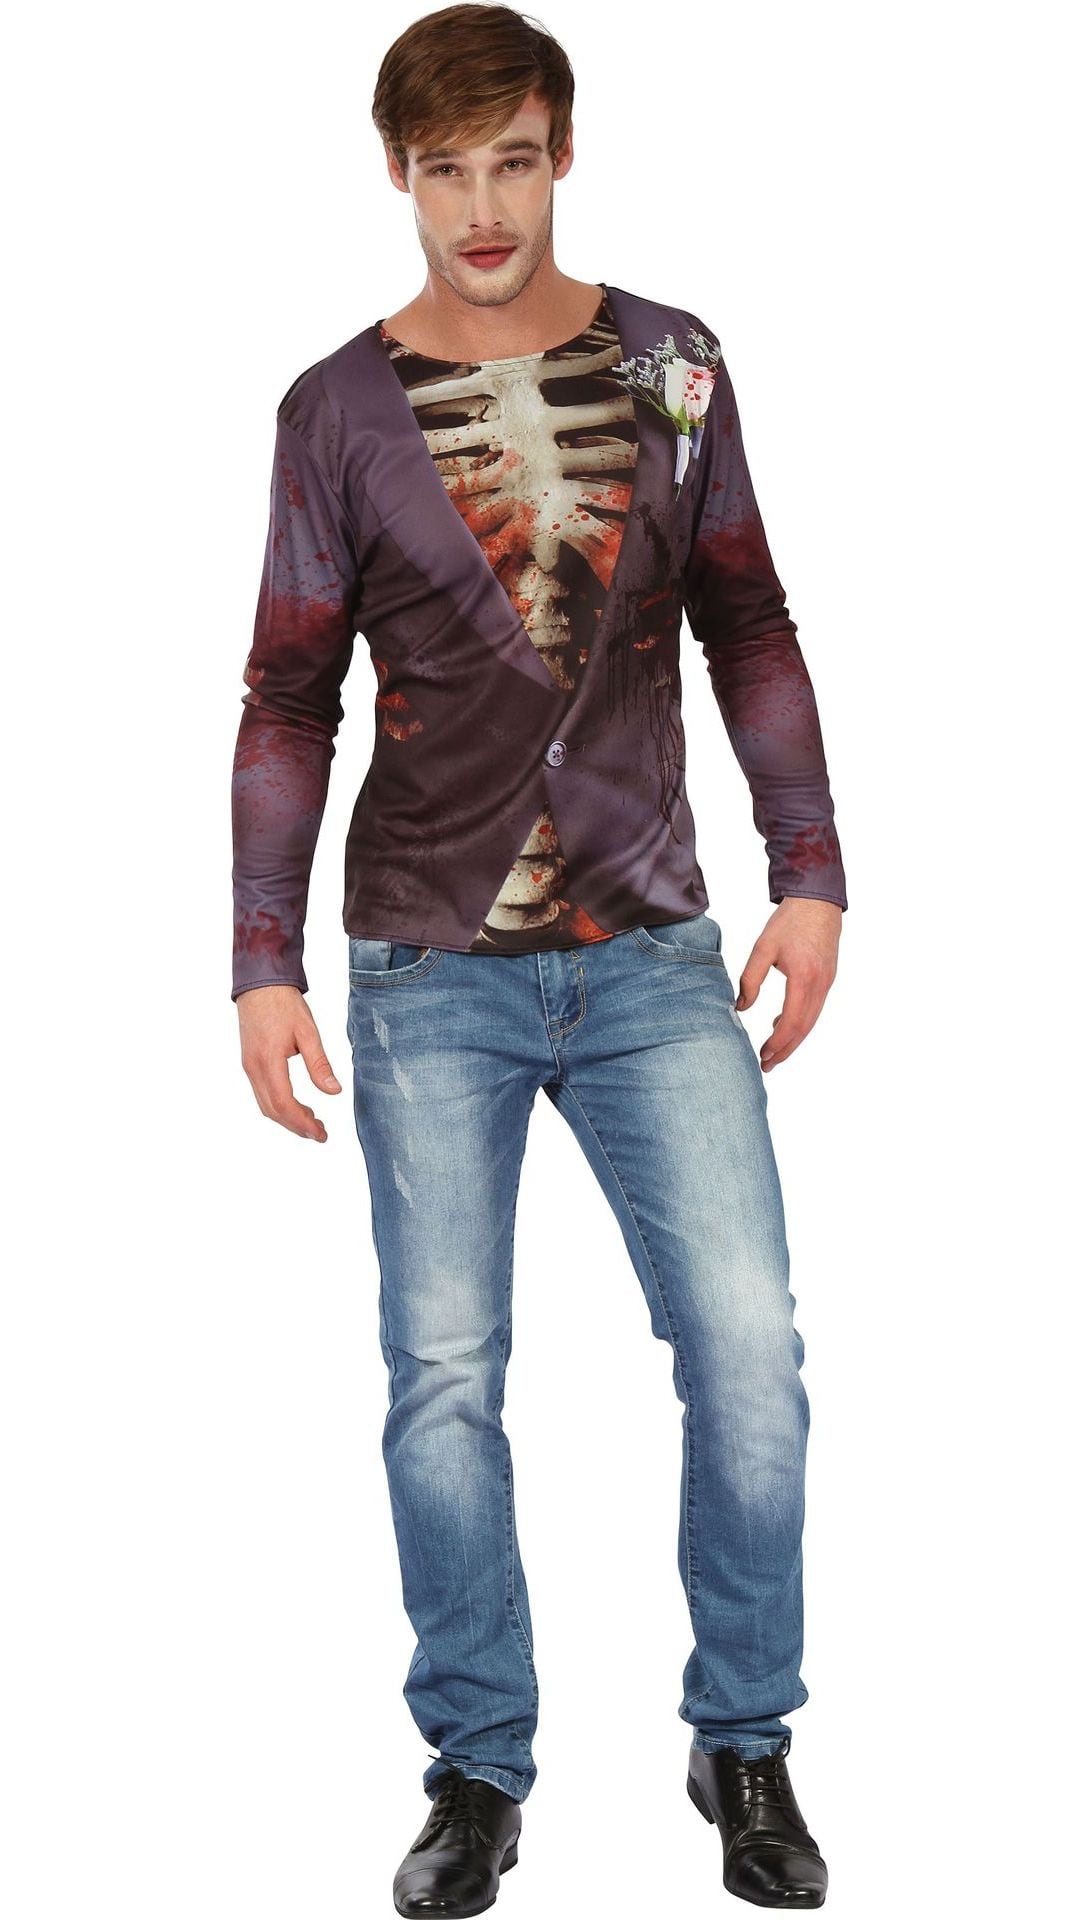 Bebloed zombie shirt